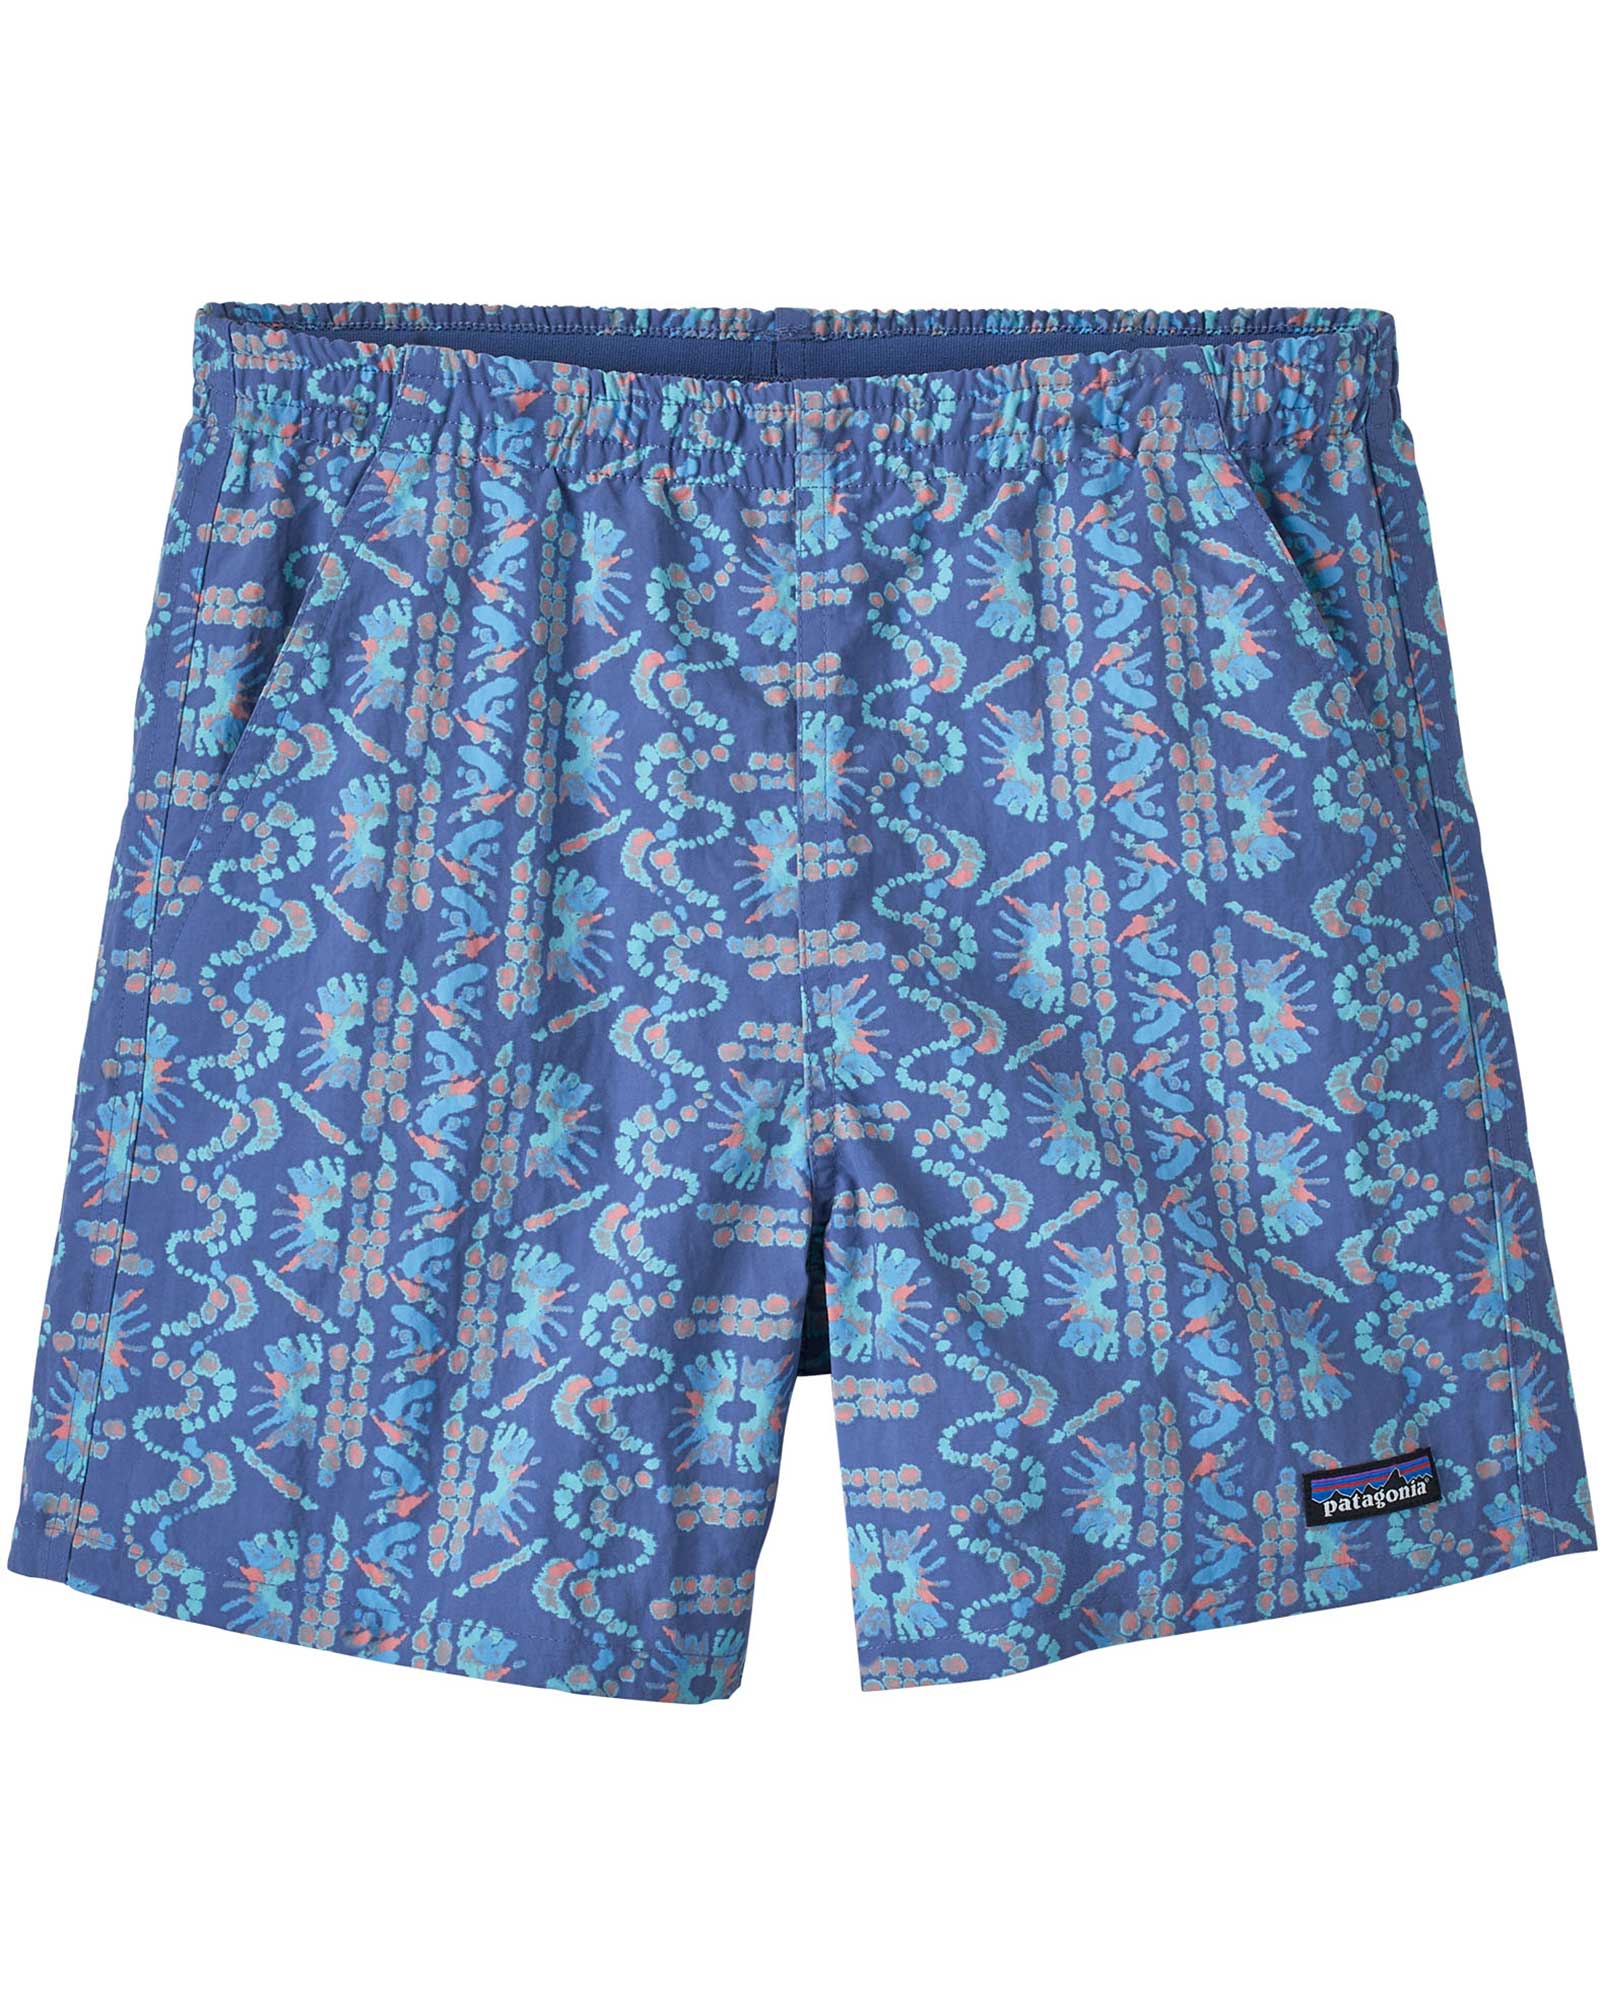 Patagonia Baggies Women’s 5" Shorts - Current Blue/Sunshine Dye S